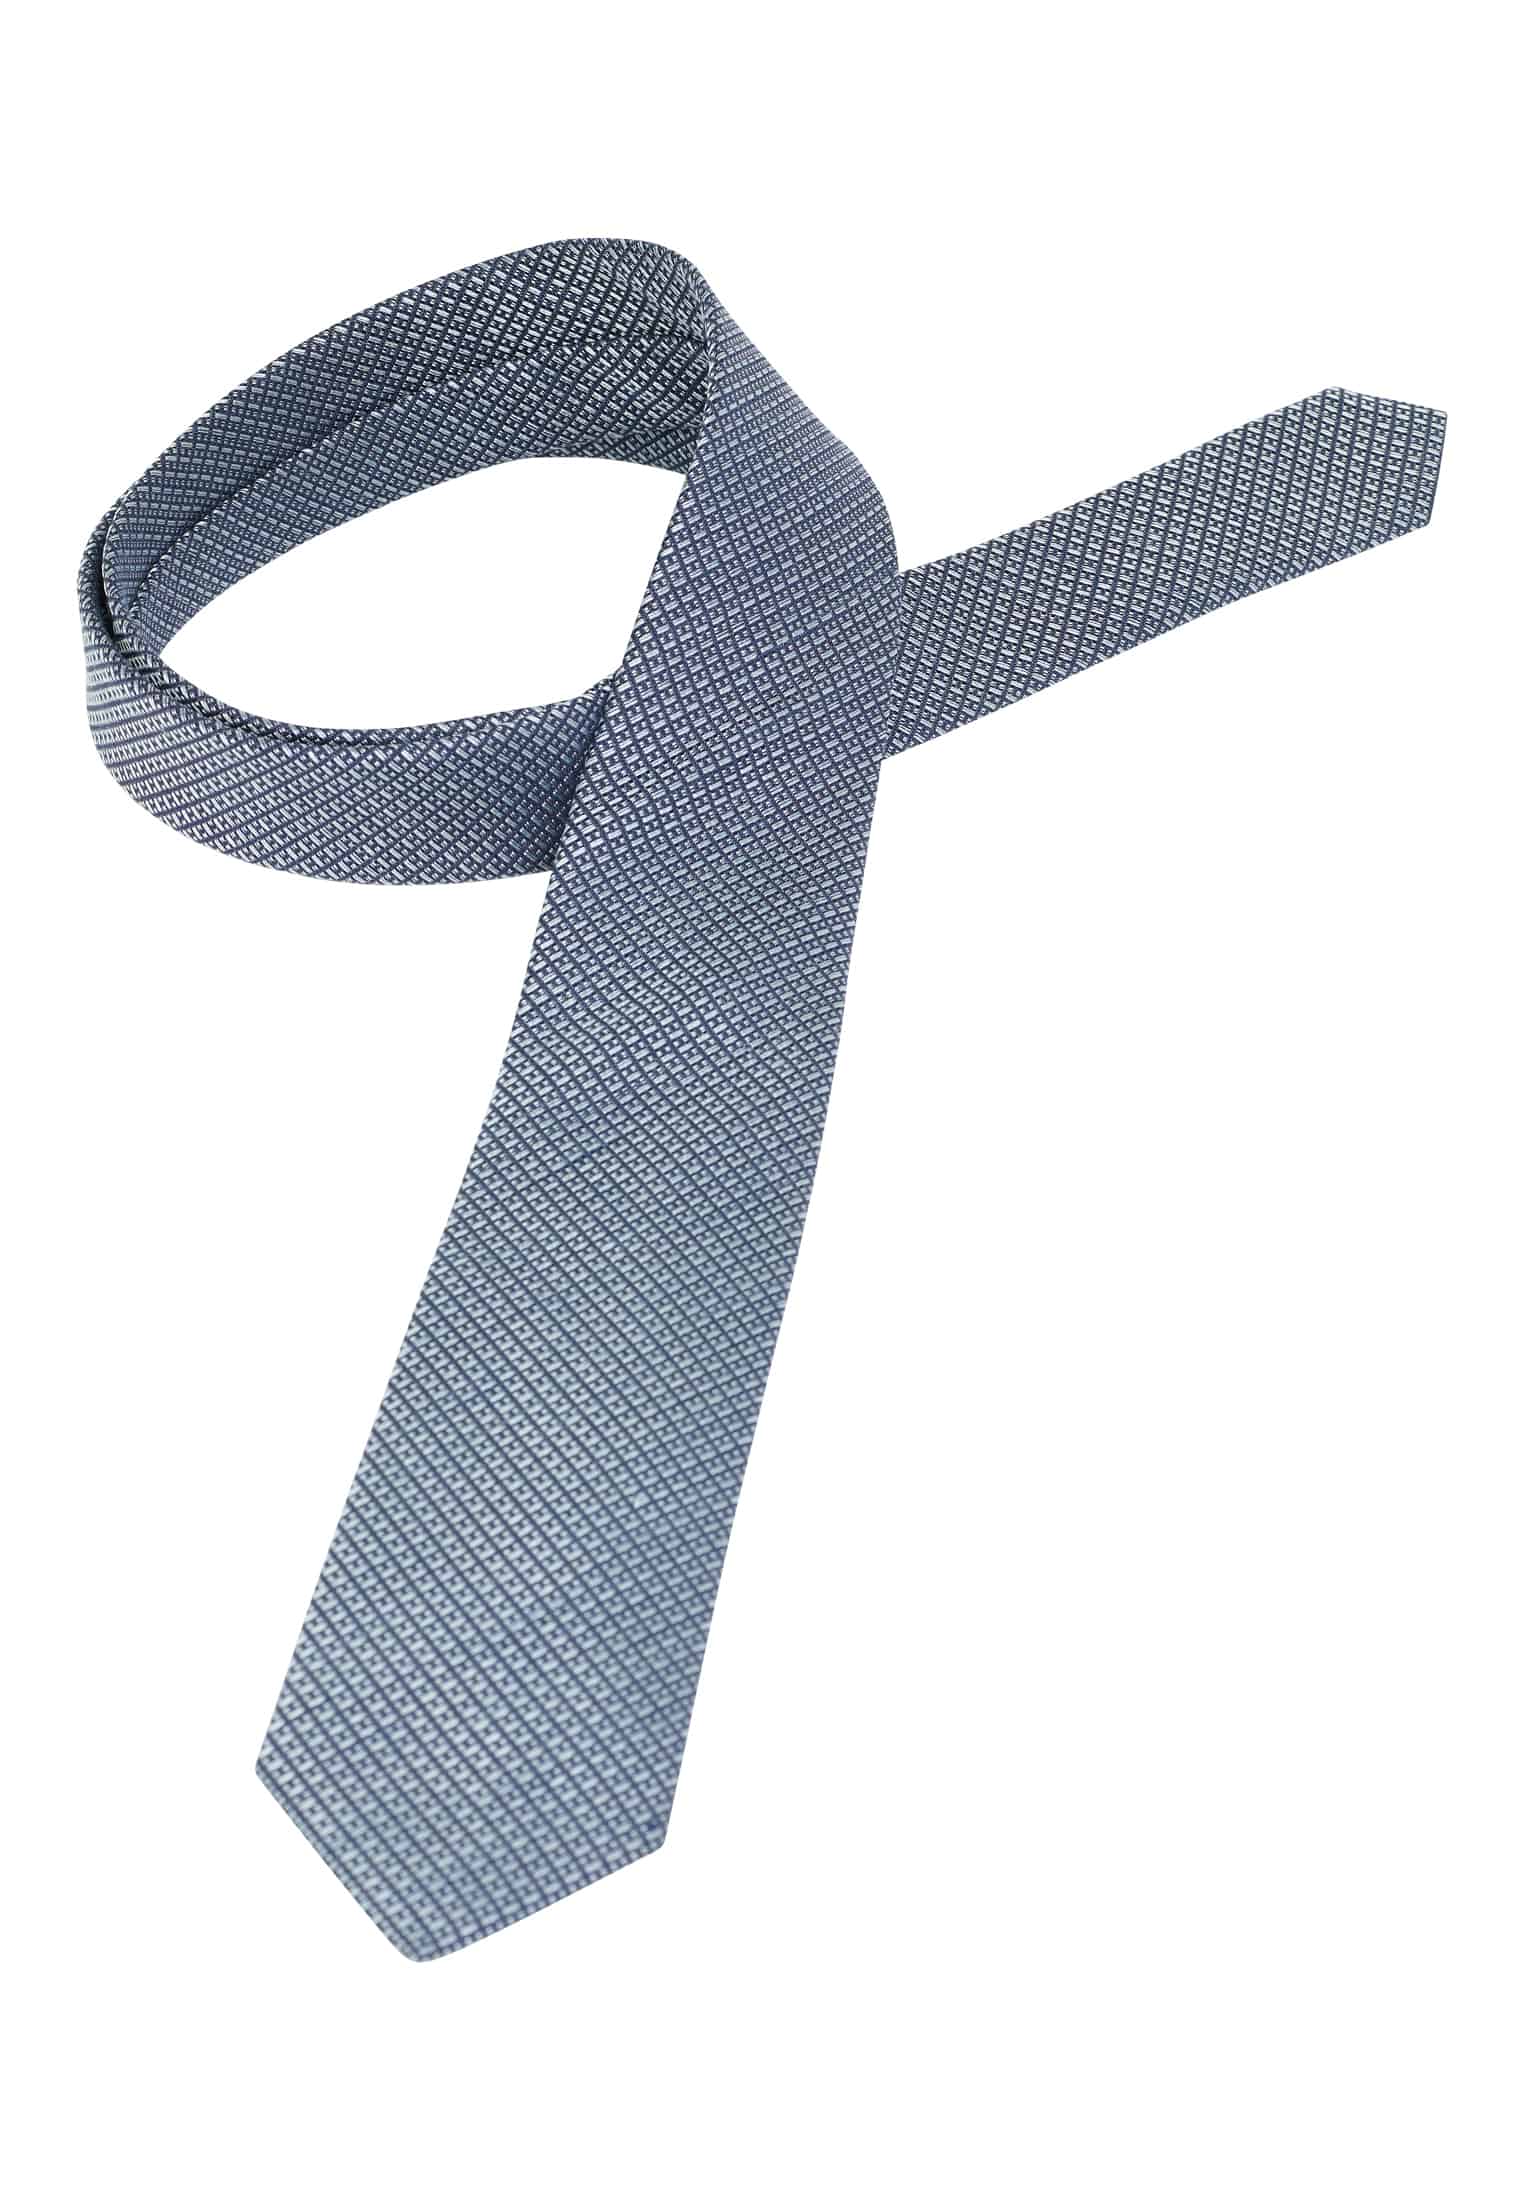 Krawatte in 142 navy/grün | | gemustert navy/grün | 1AC01949-81-88-142